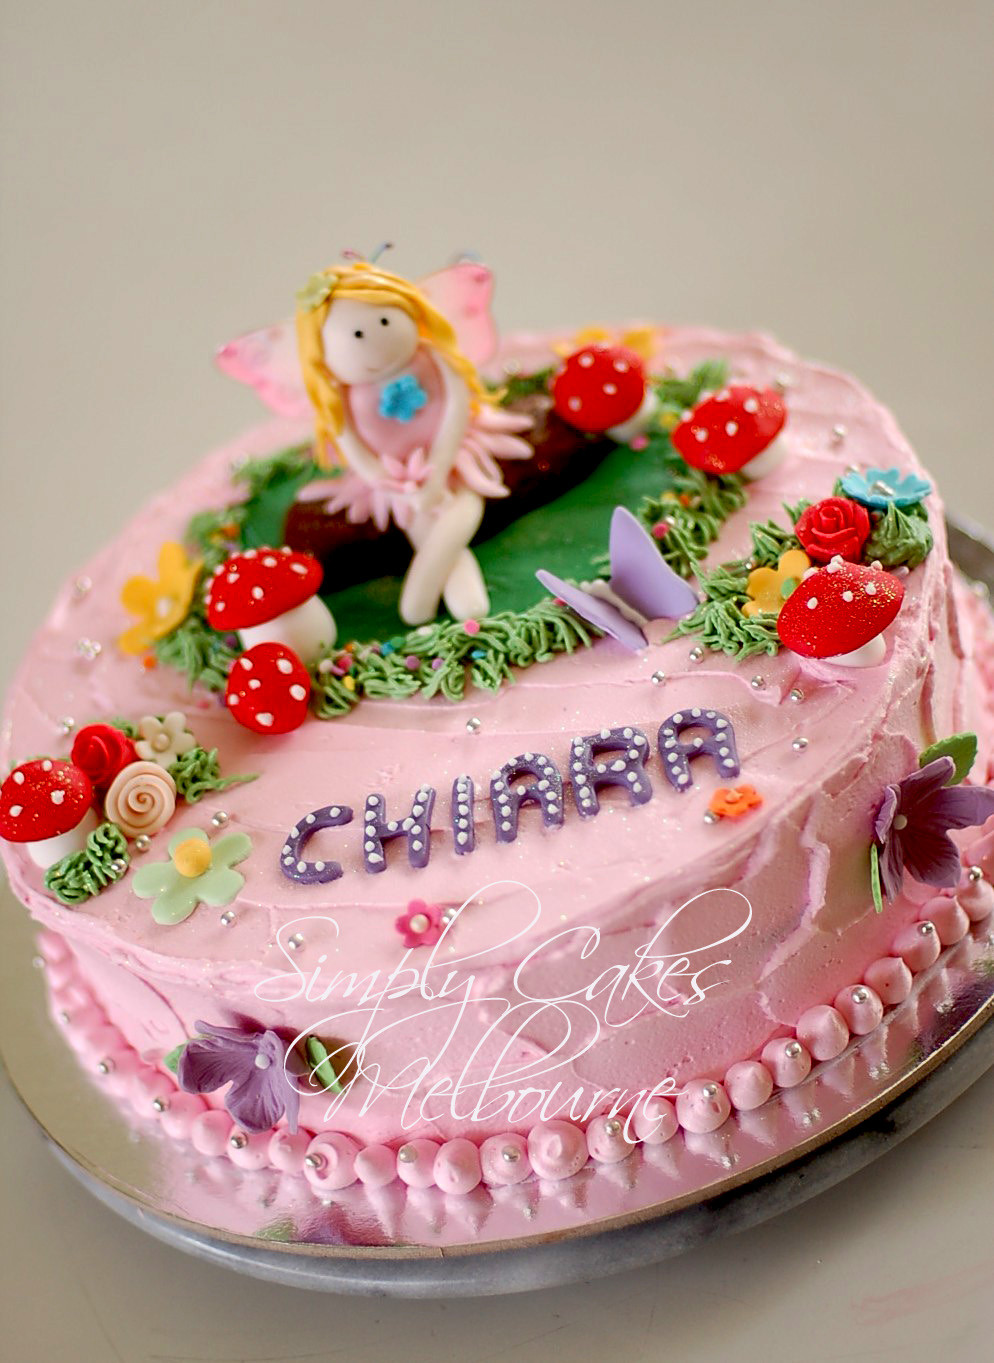 Fairy Birthday Cakes
 Simply Cakes Melbourne Fairy birthday cake